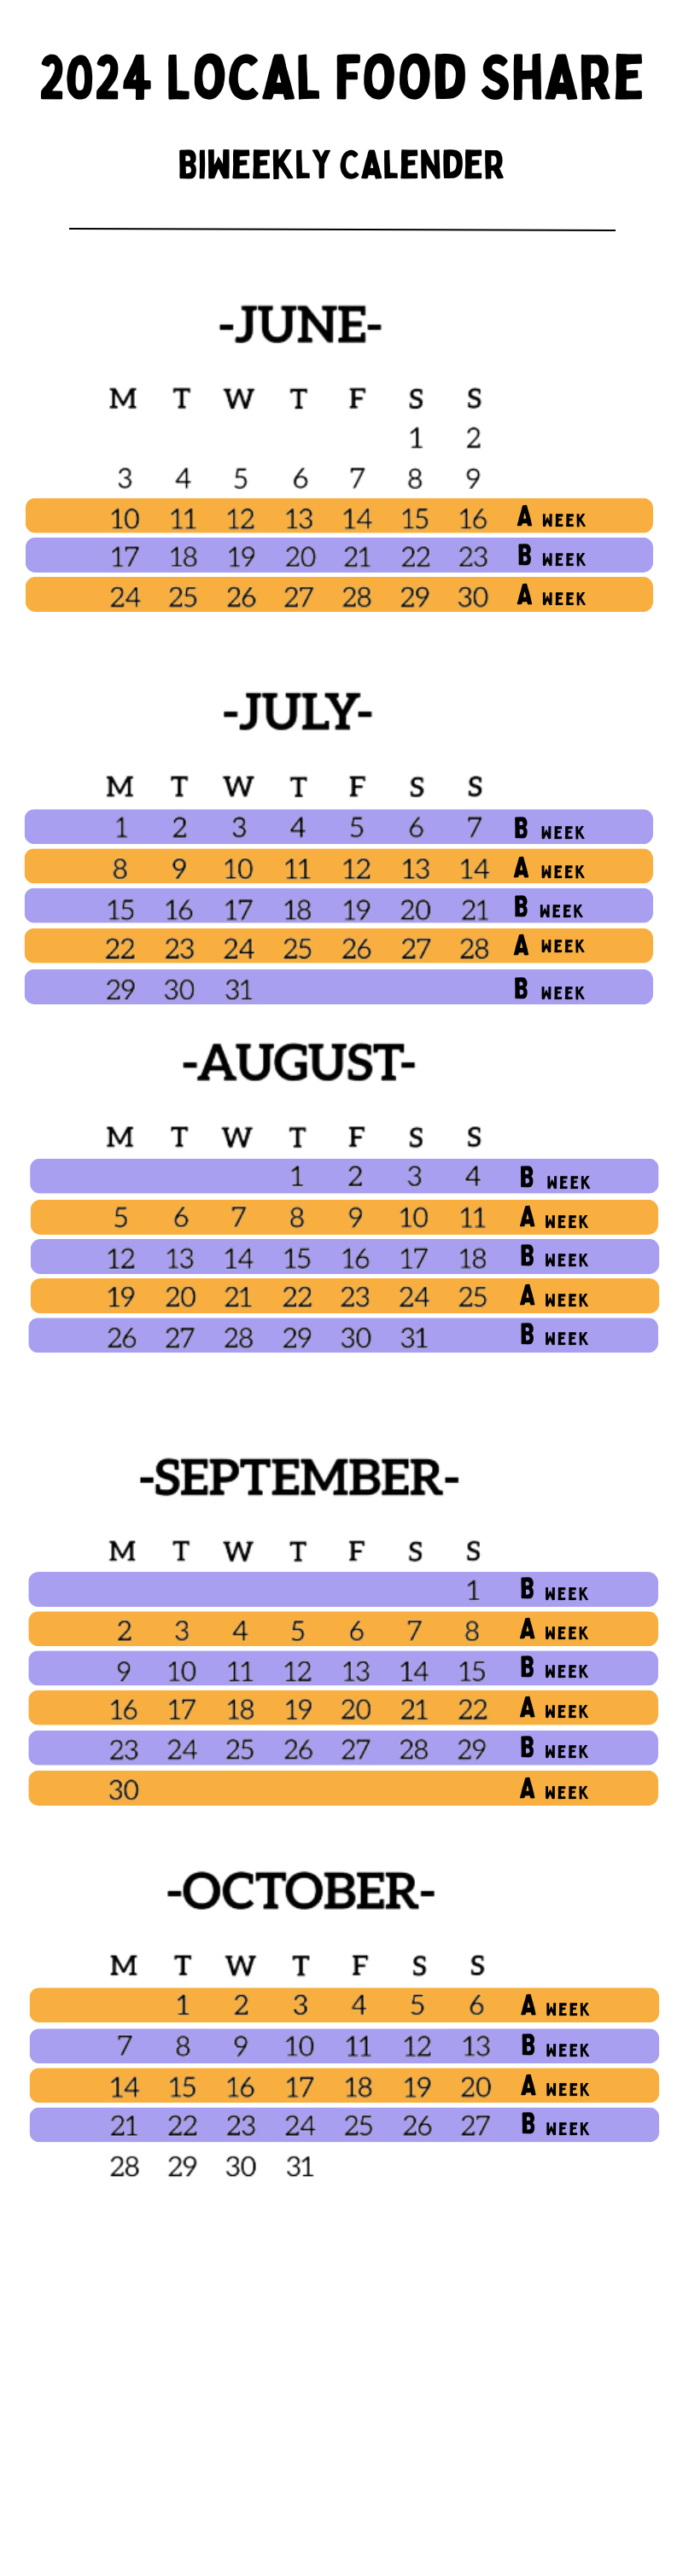 Biweekly Calendar - 2024 Local Food Share pertaining to July Ebt Calendar 2024